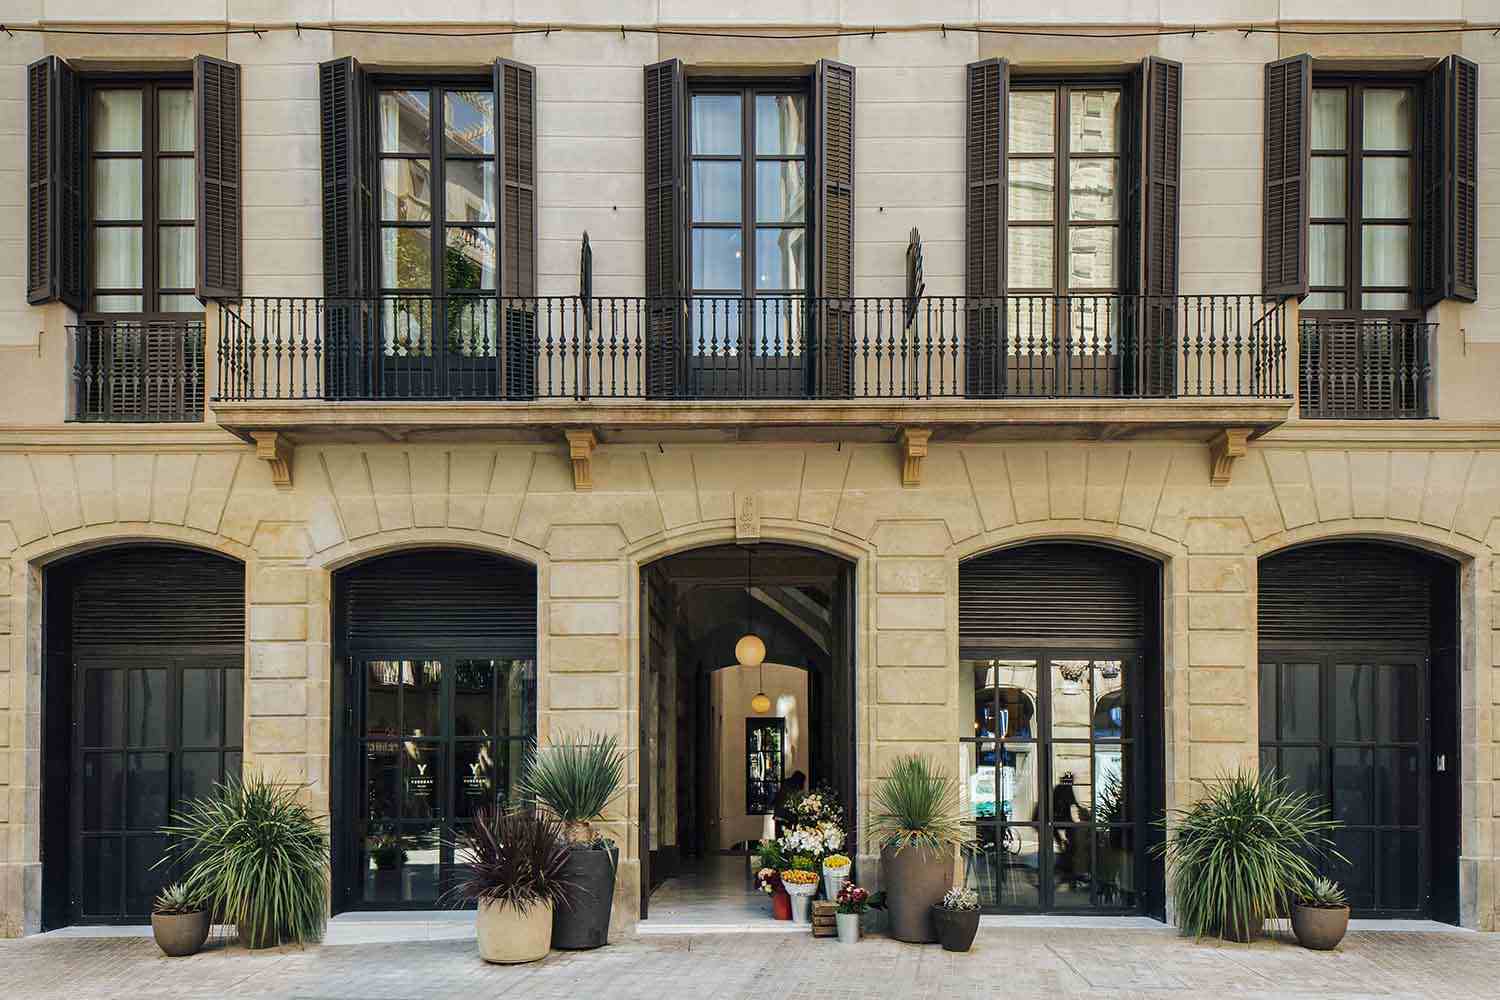 Yurbban Passage Hotel & Spa Barcelona, Catalonia - Spain